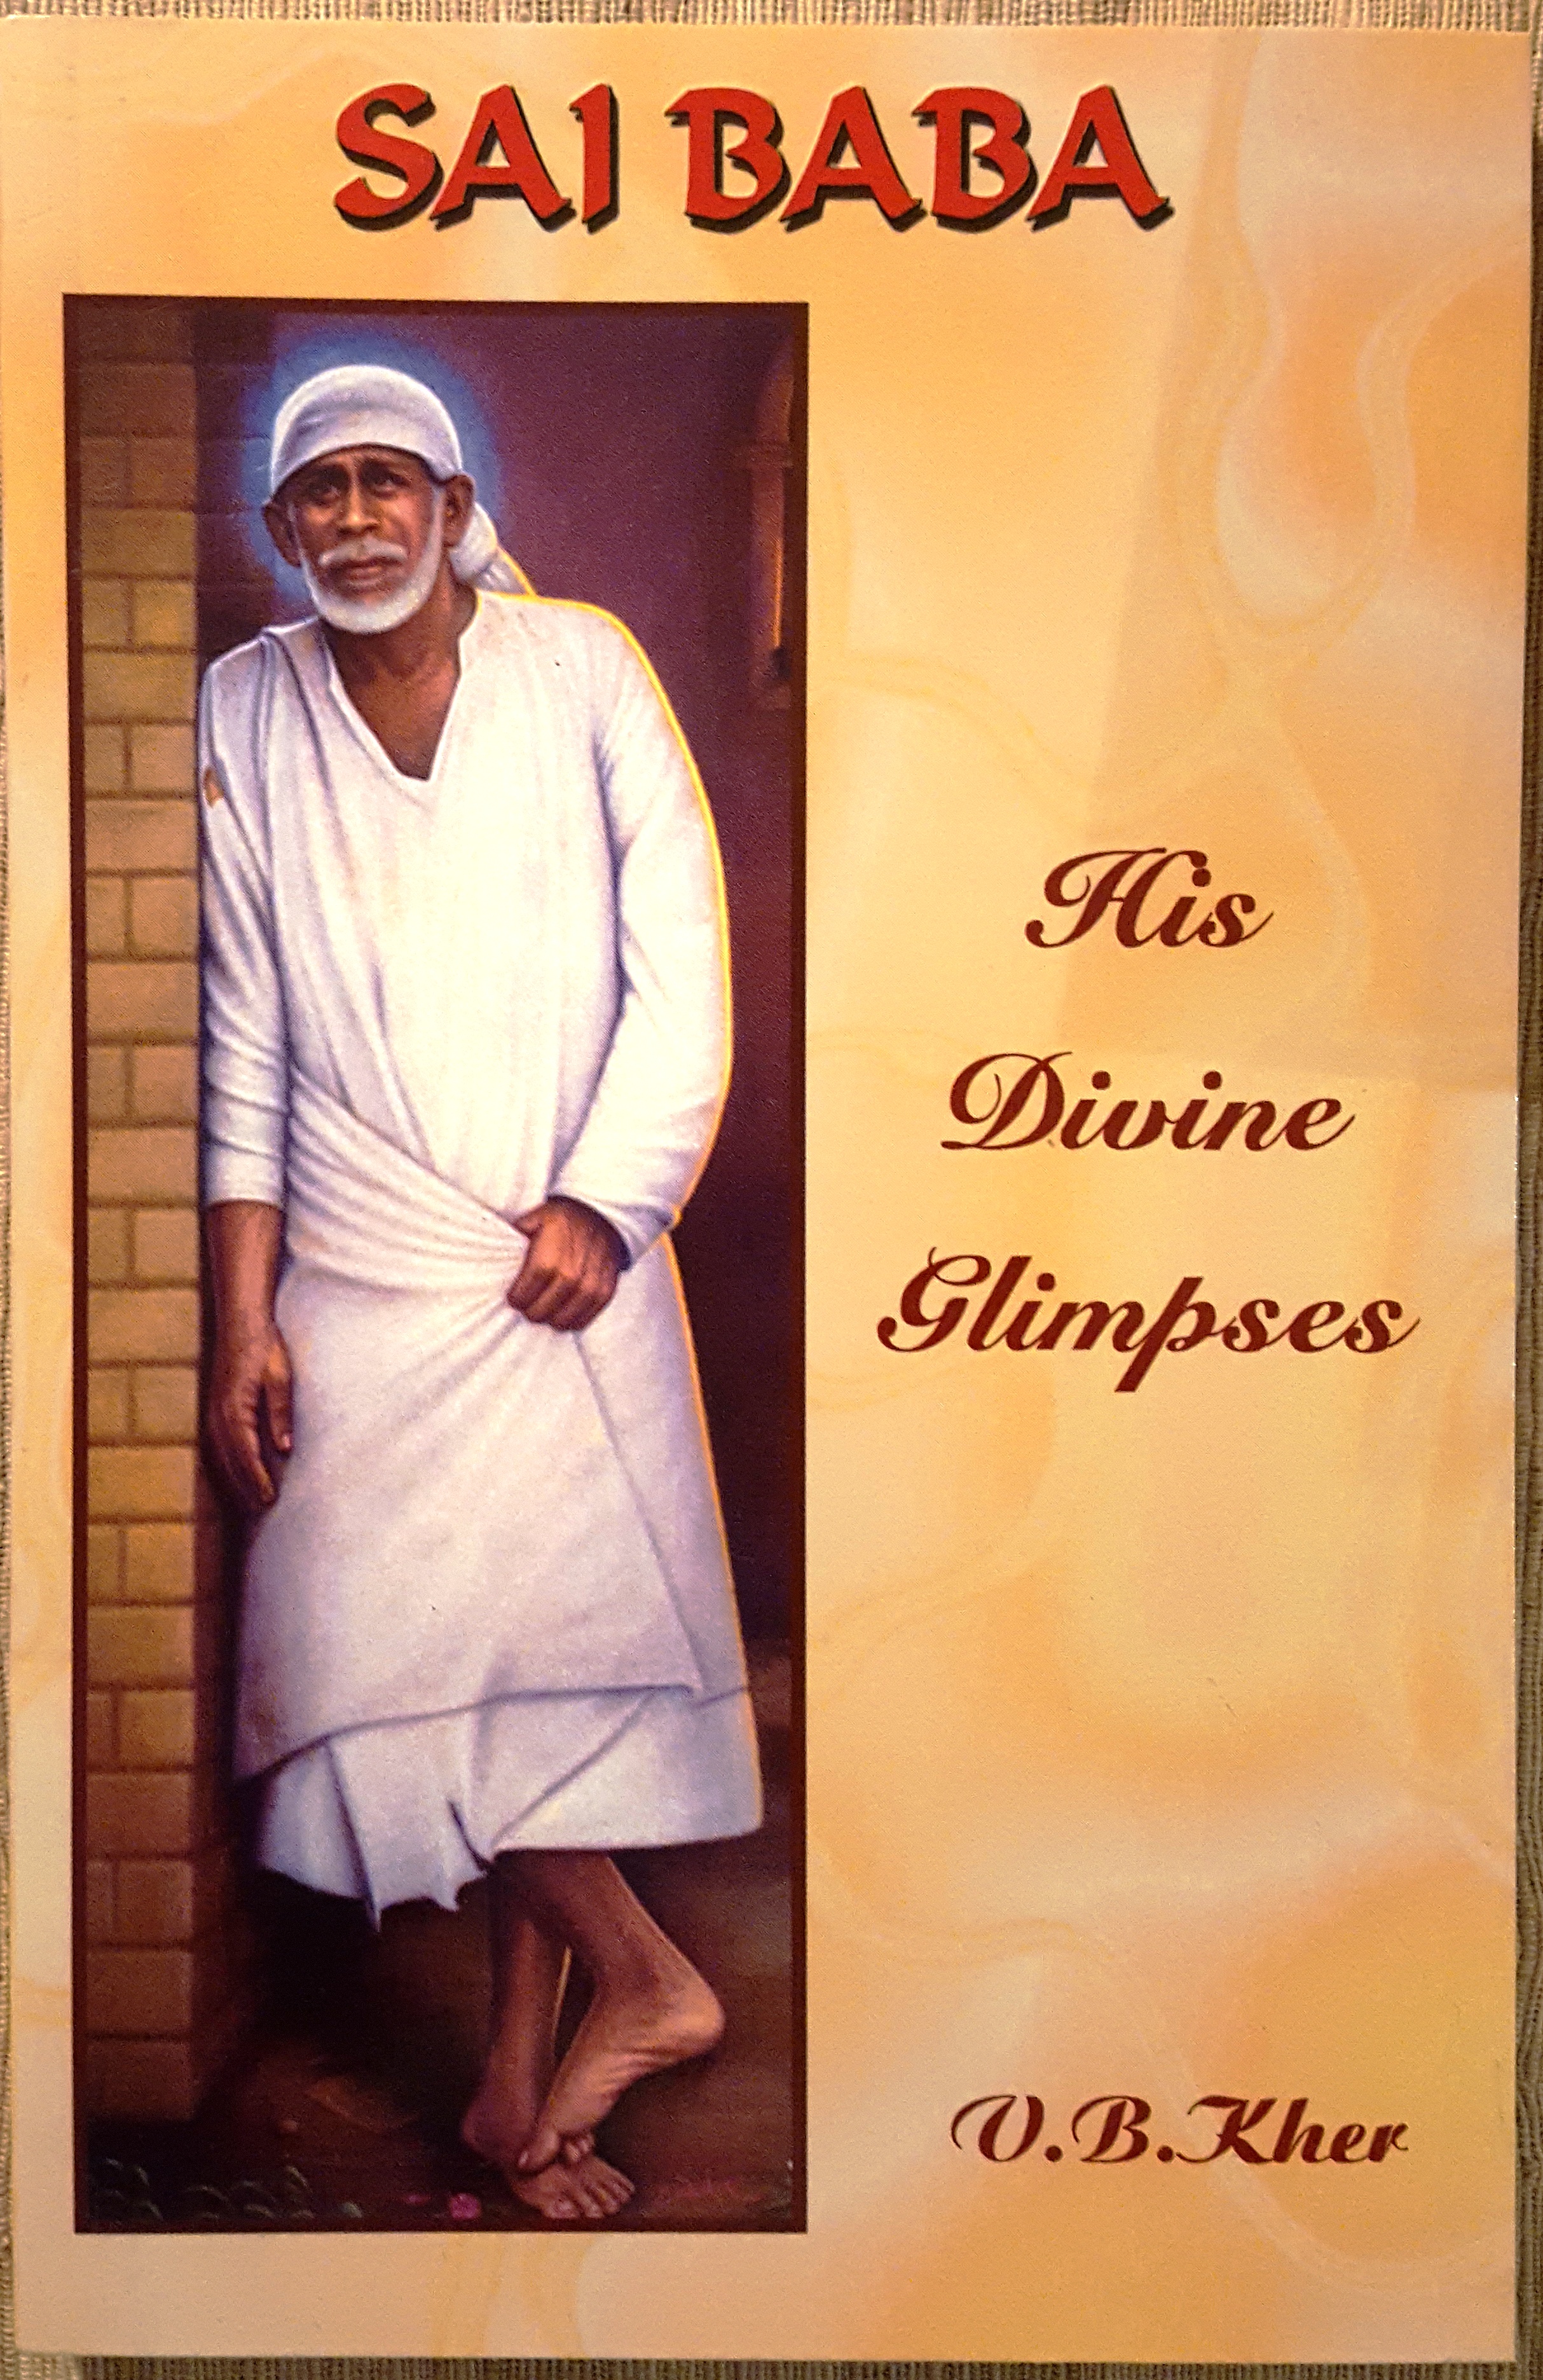 Shirdi Sai Baba Temple Frankfurt Germany (Deutschland) recommended book - Sai Baba - His device glimpse .